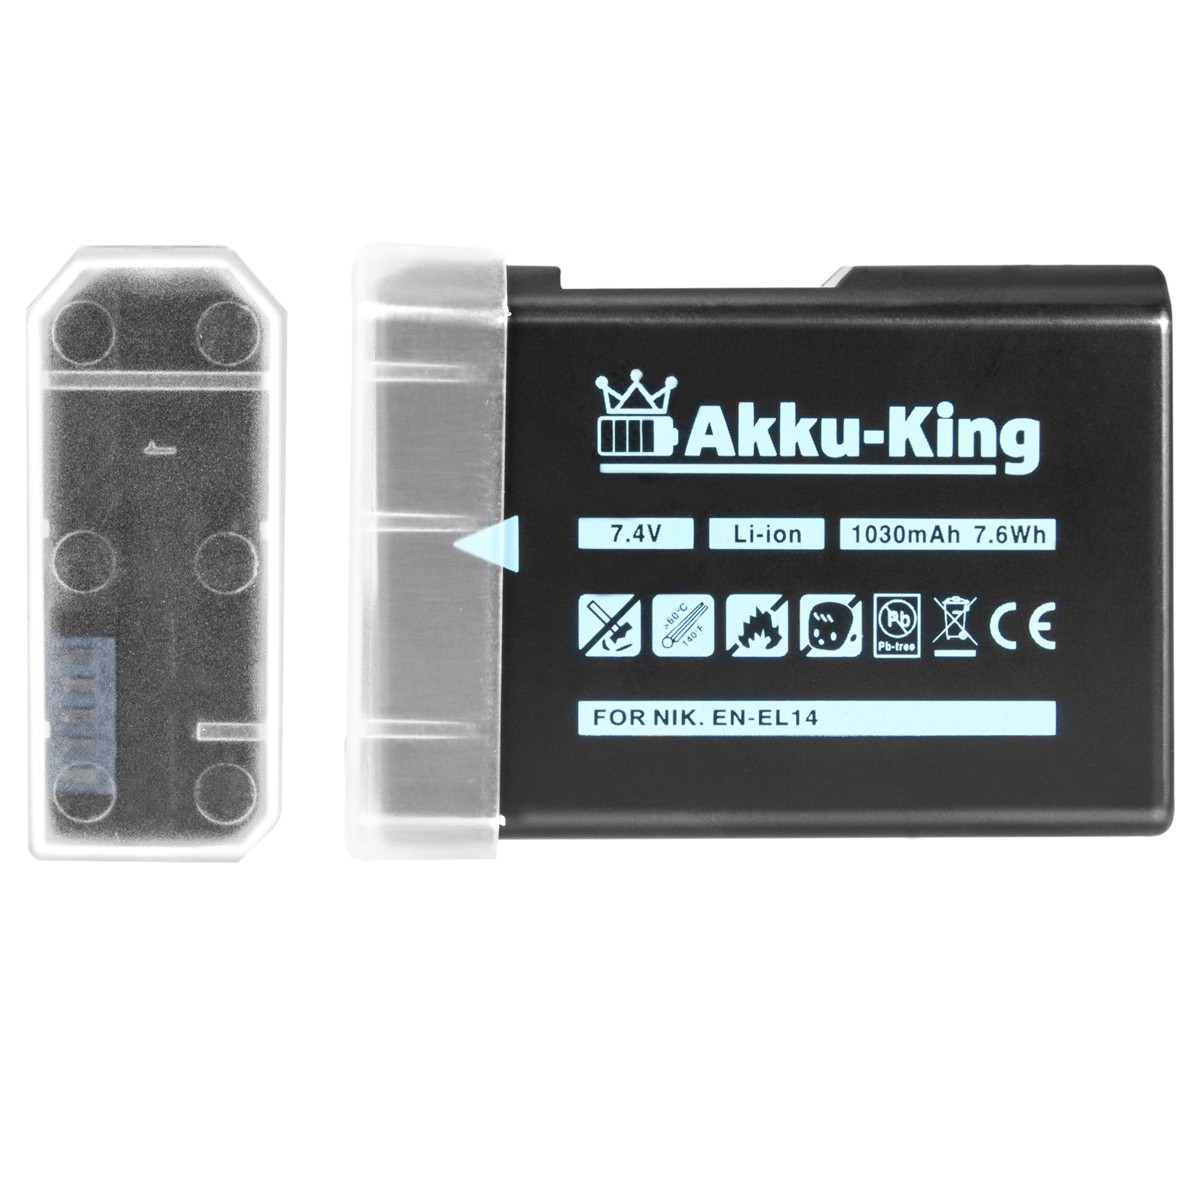 kompatibel Li-Ion EN-EL14 7.4 AKKU-KING Akku Nikon 1030mAh mit Volt, Kamera-Akku,